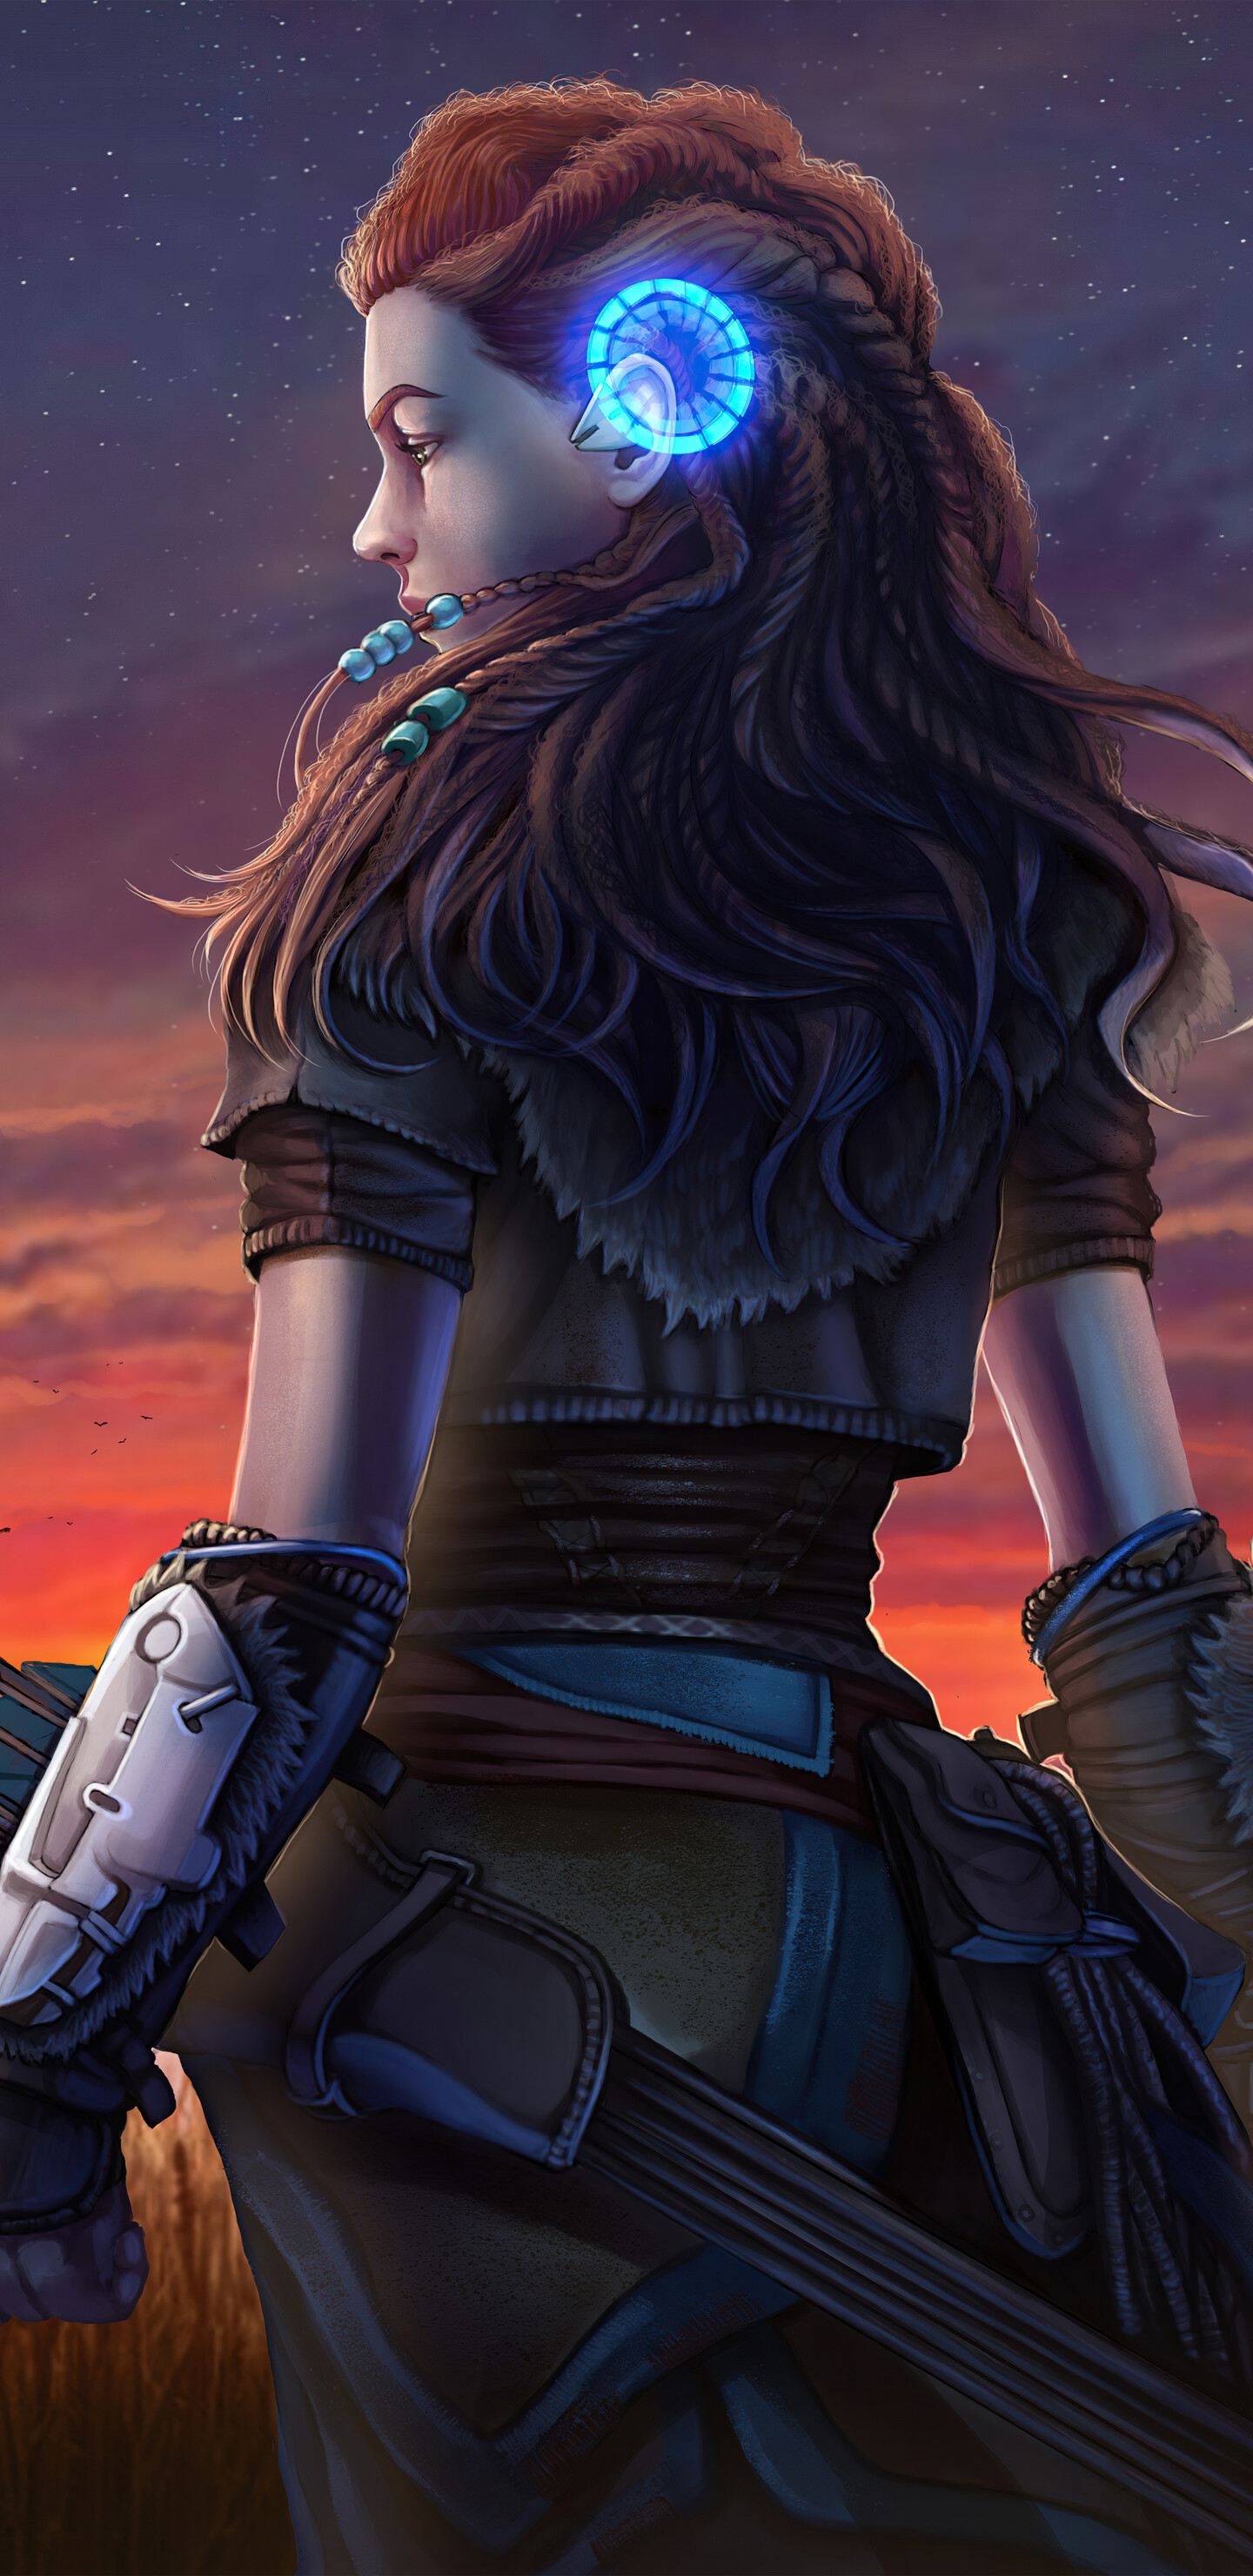 Horizon Zero Dawn: Aloy, The main protagonist of RPG. 1440x2960 HD Wallpaper.